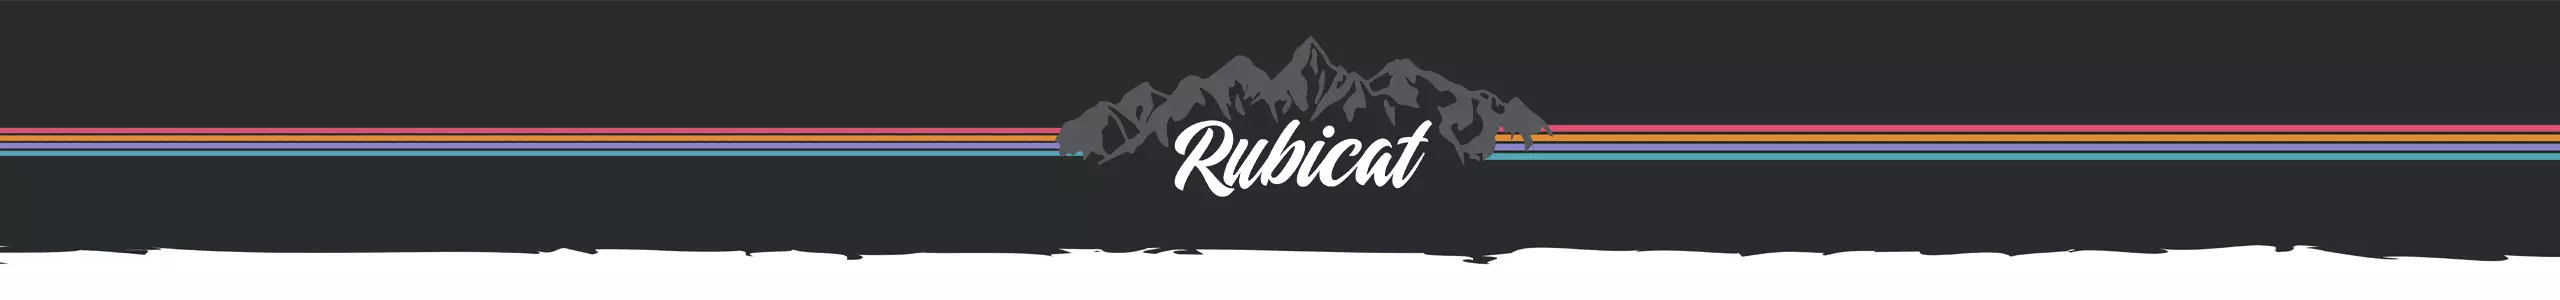 Banner Rubicat